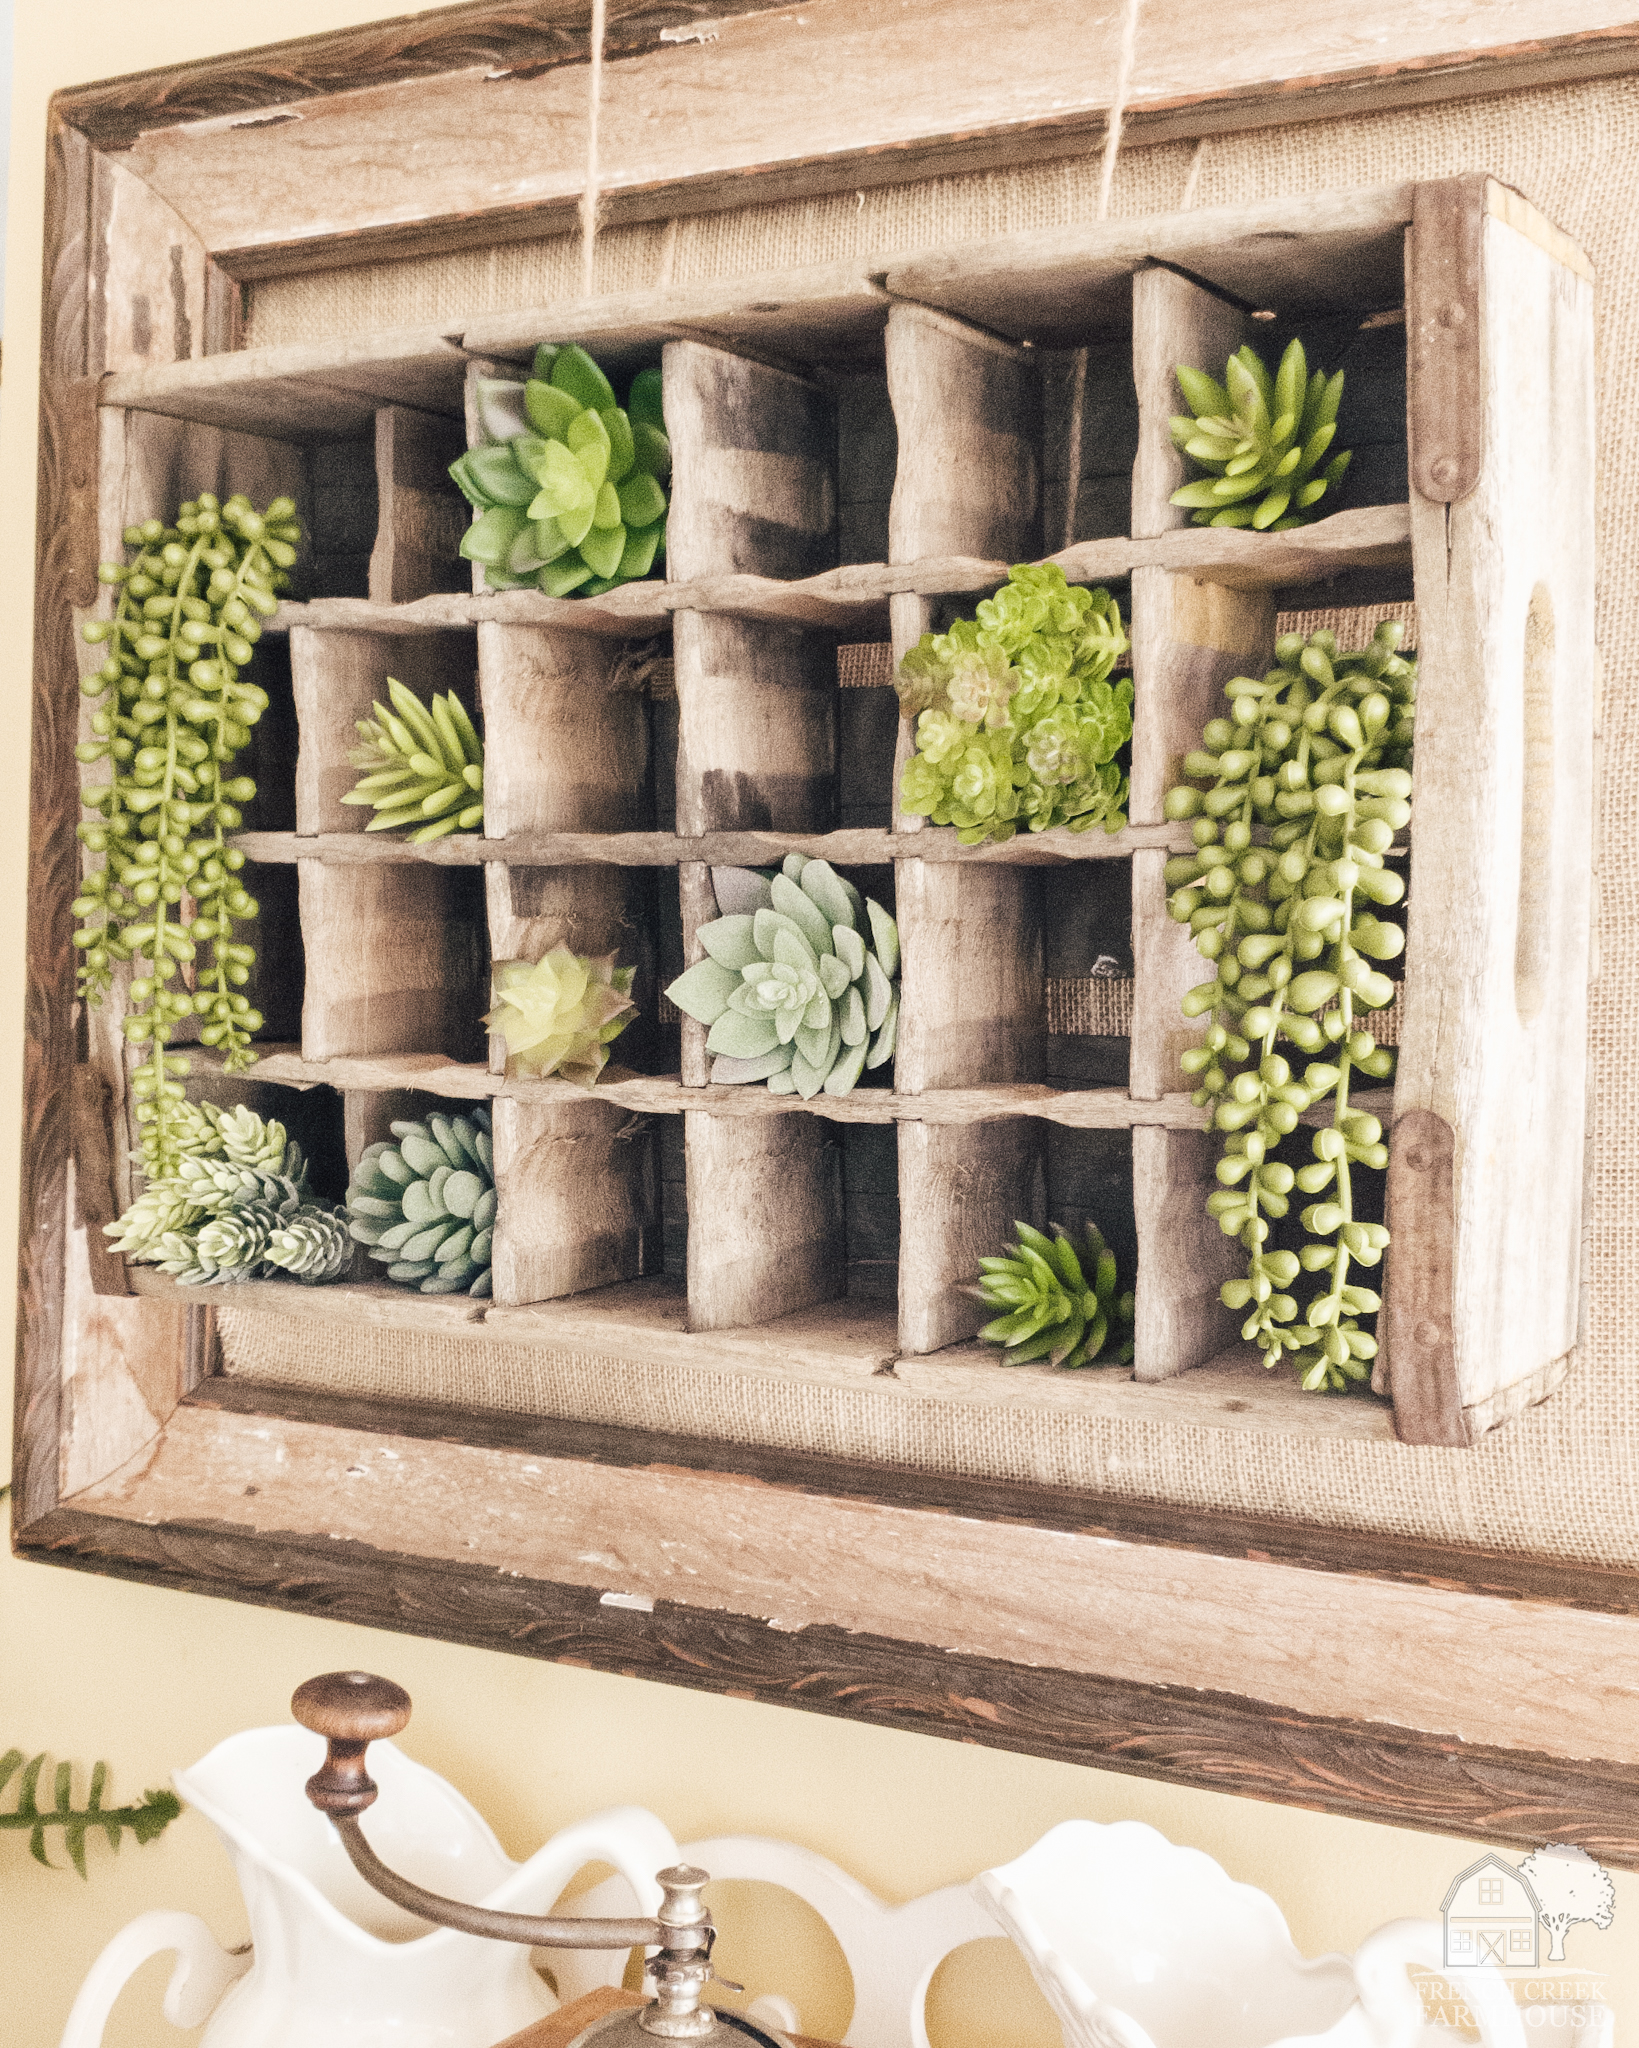 Succulents in a wooden crate make a rustic wall arrangement